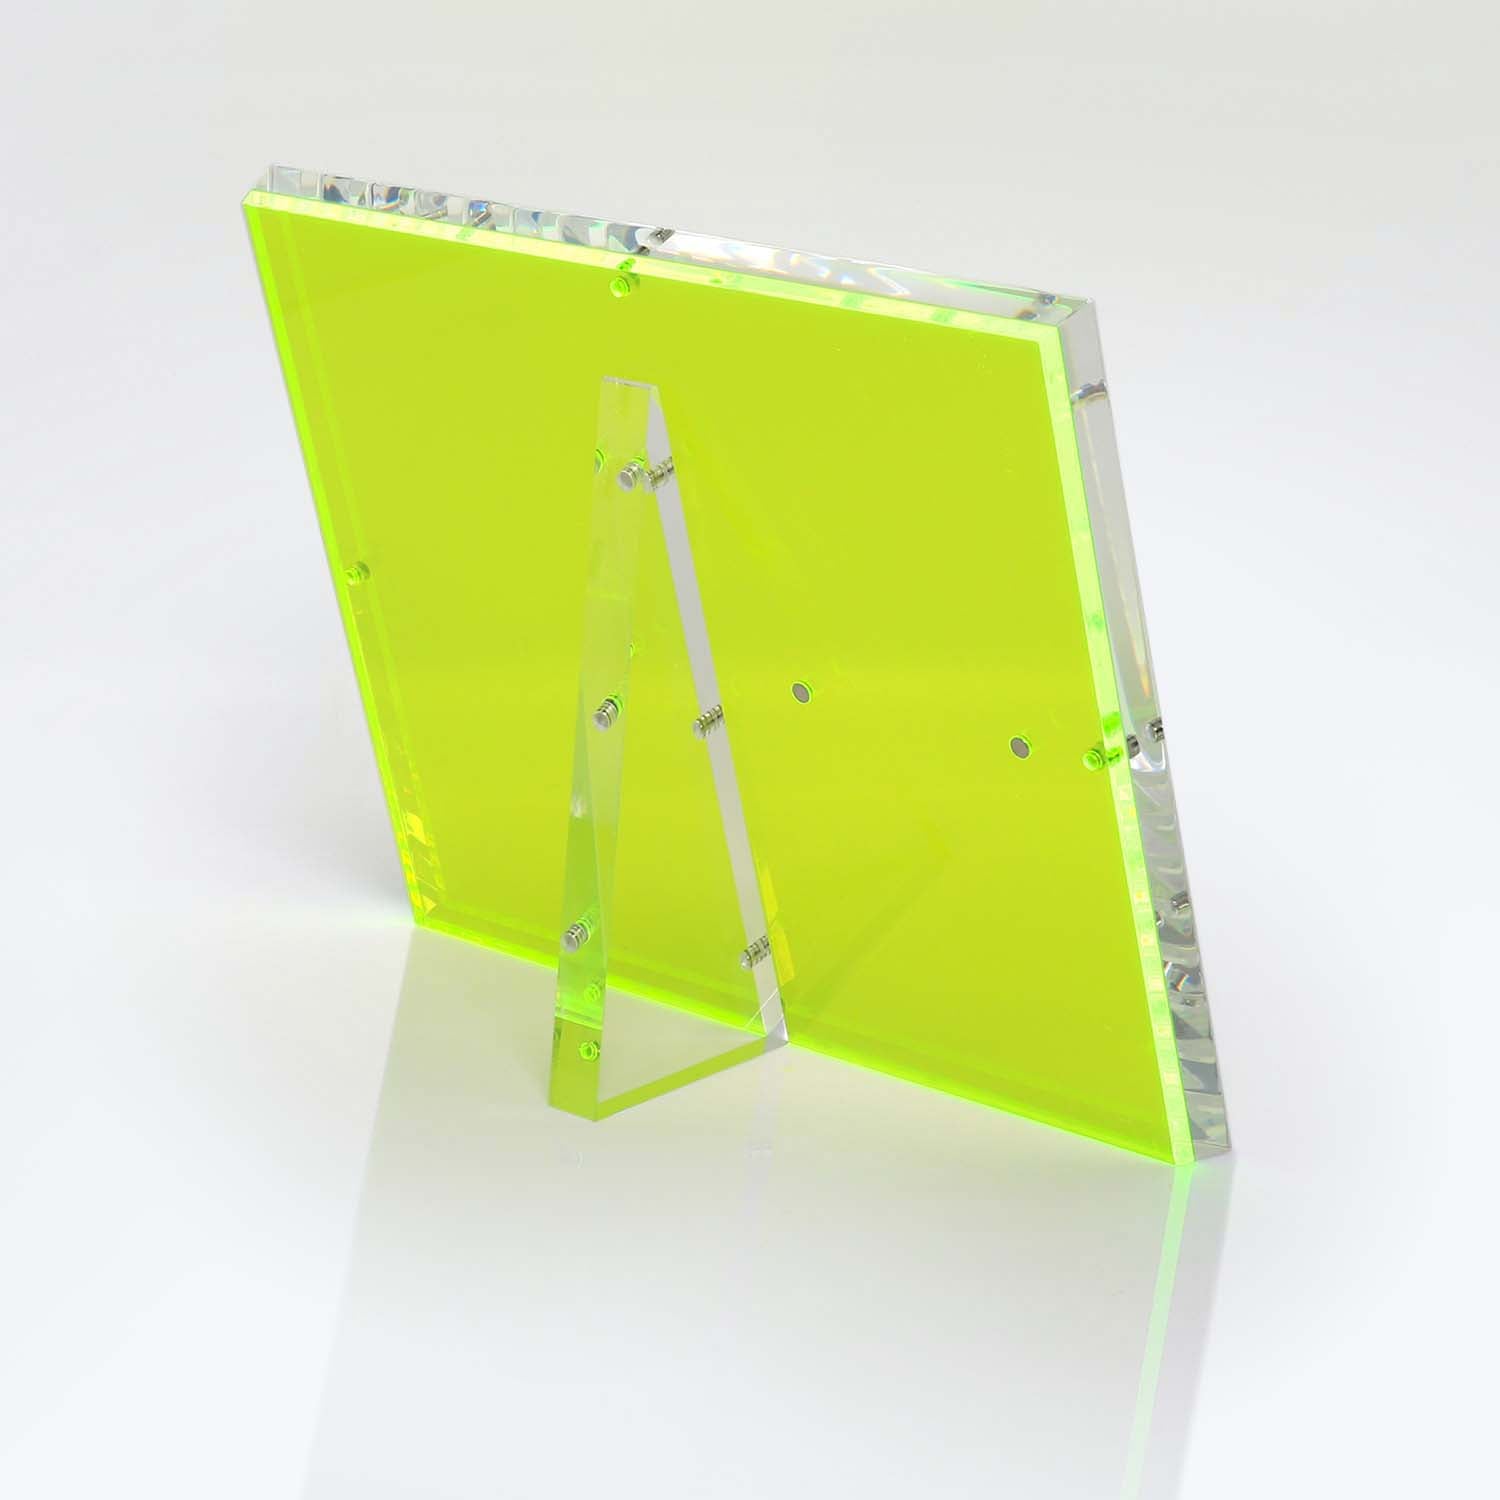 Vibrant neon green acrylic stand with sleek, modern design.